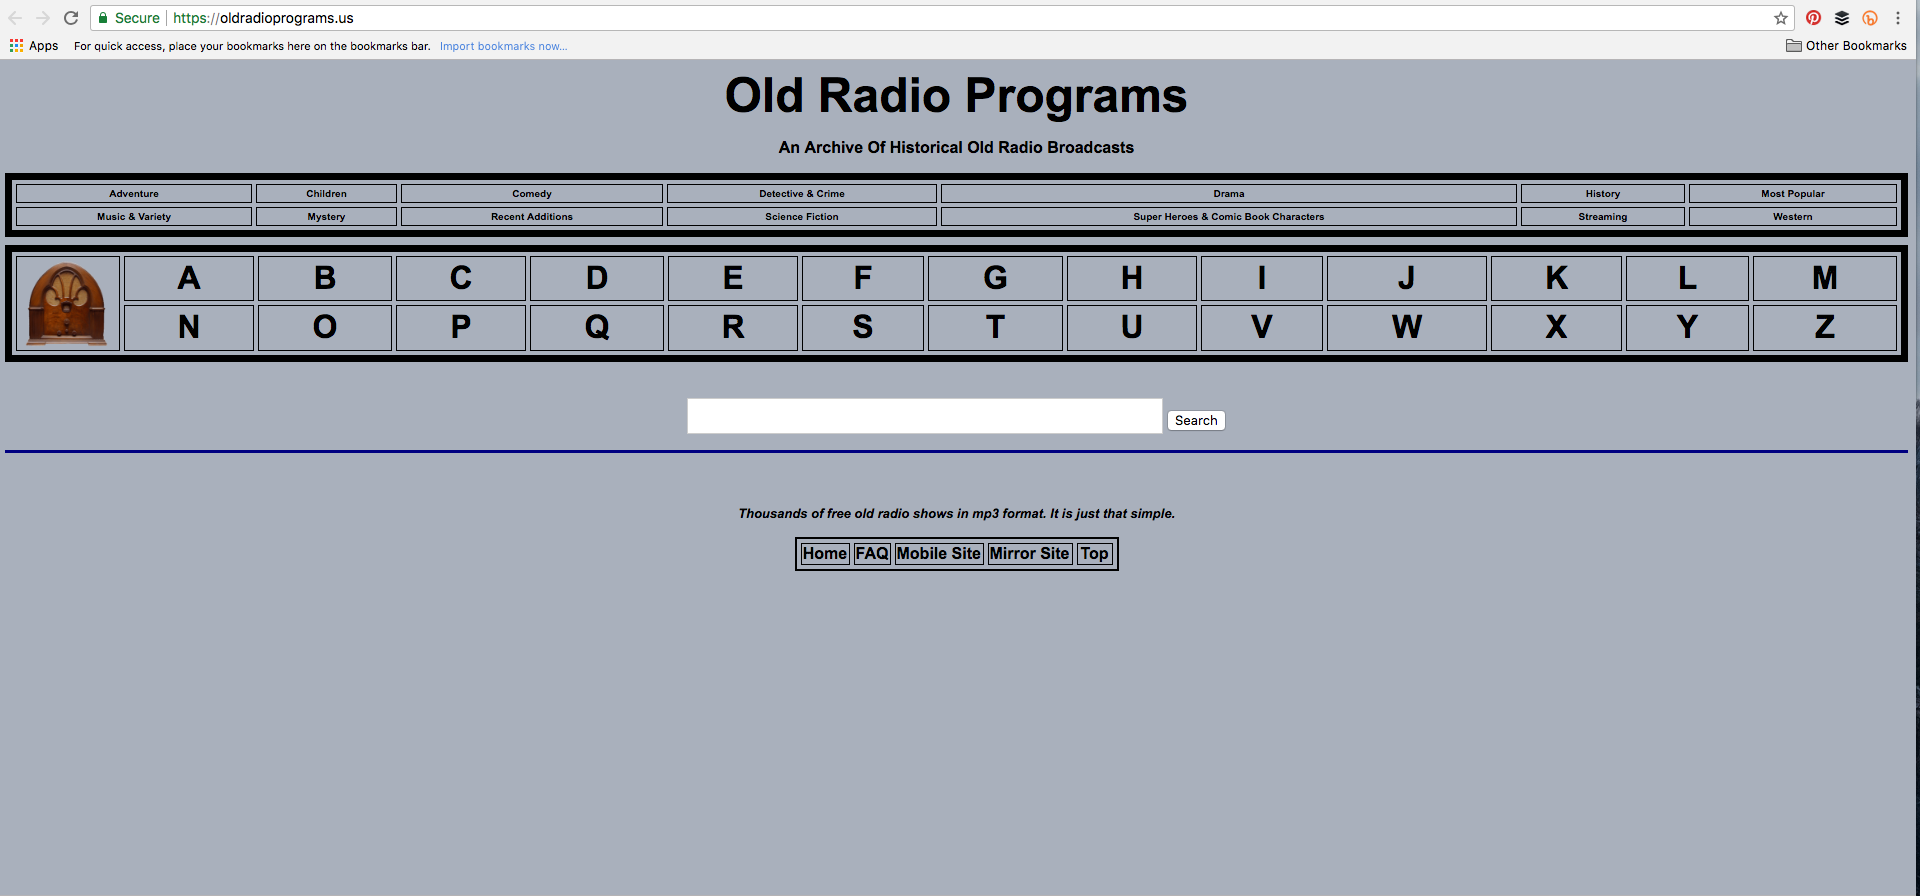 Old radio programs website image